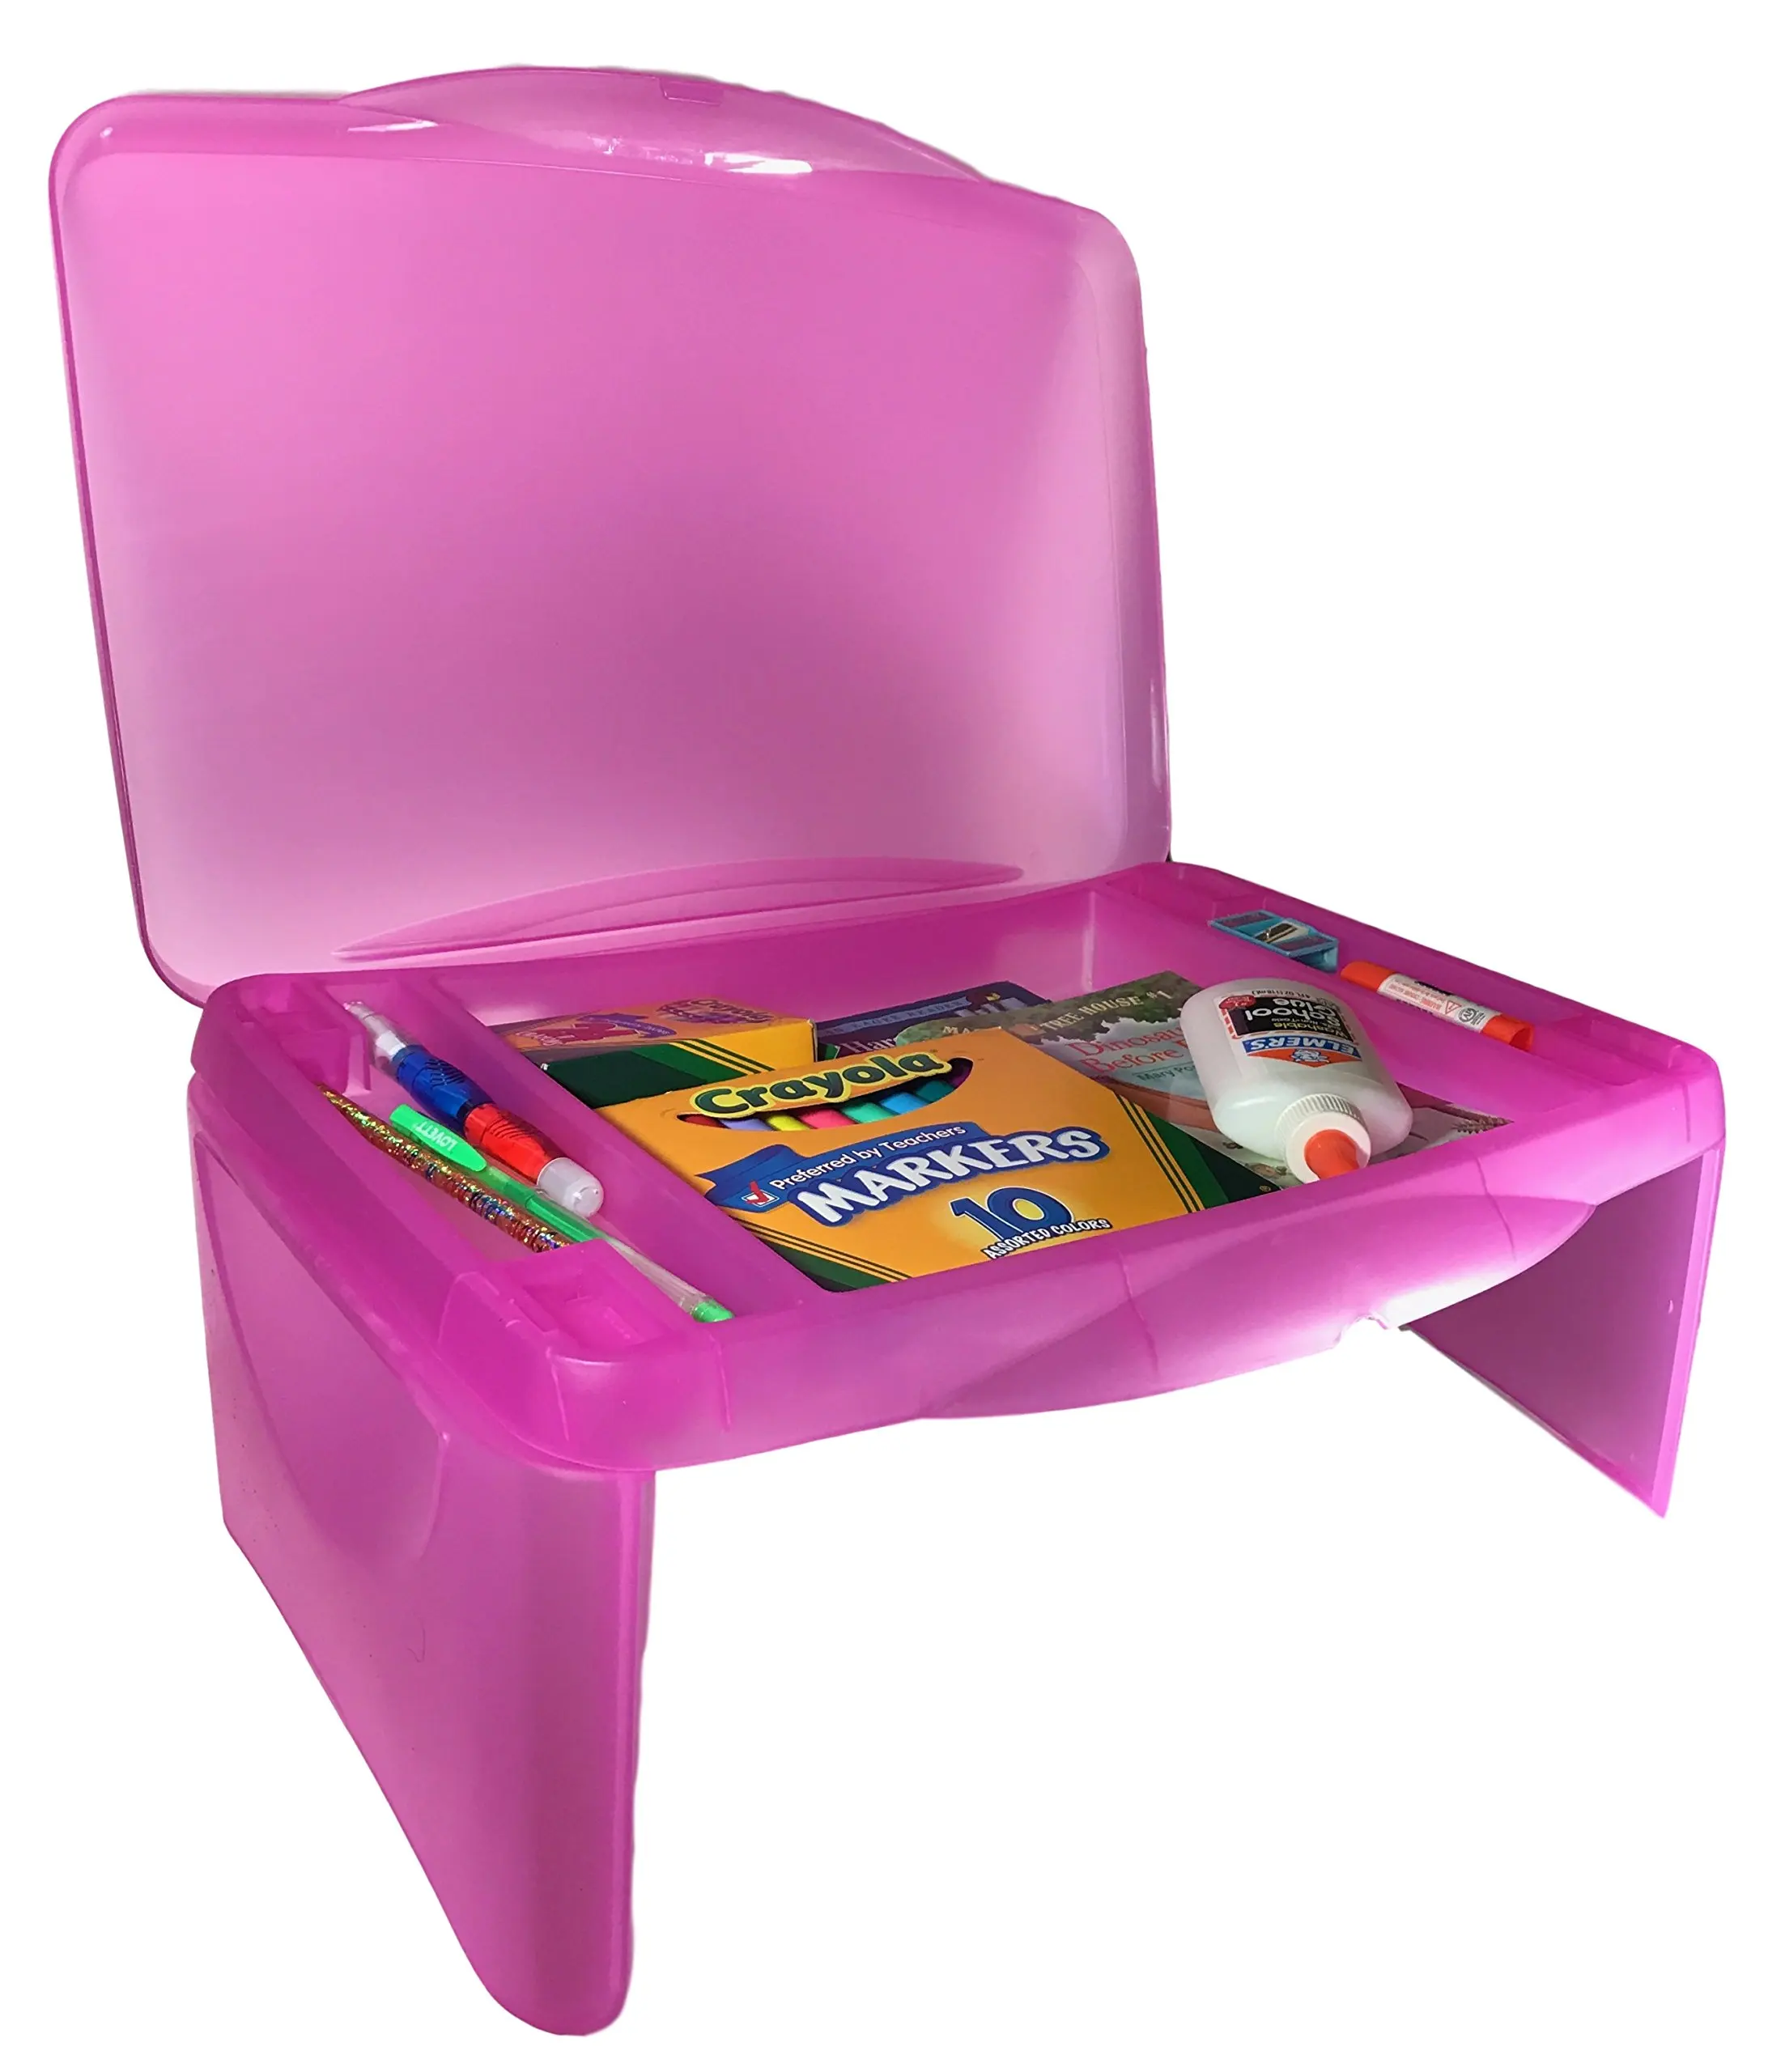 Buy Kids Folding Lap Desk Pink Ndash Foldable Lap Tray With